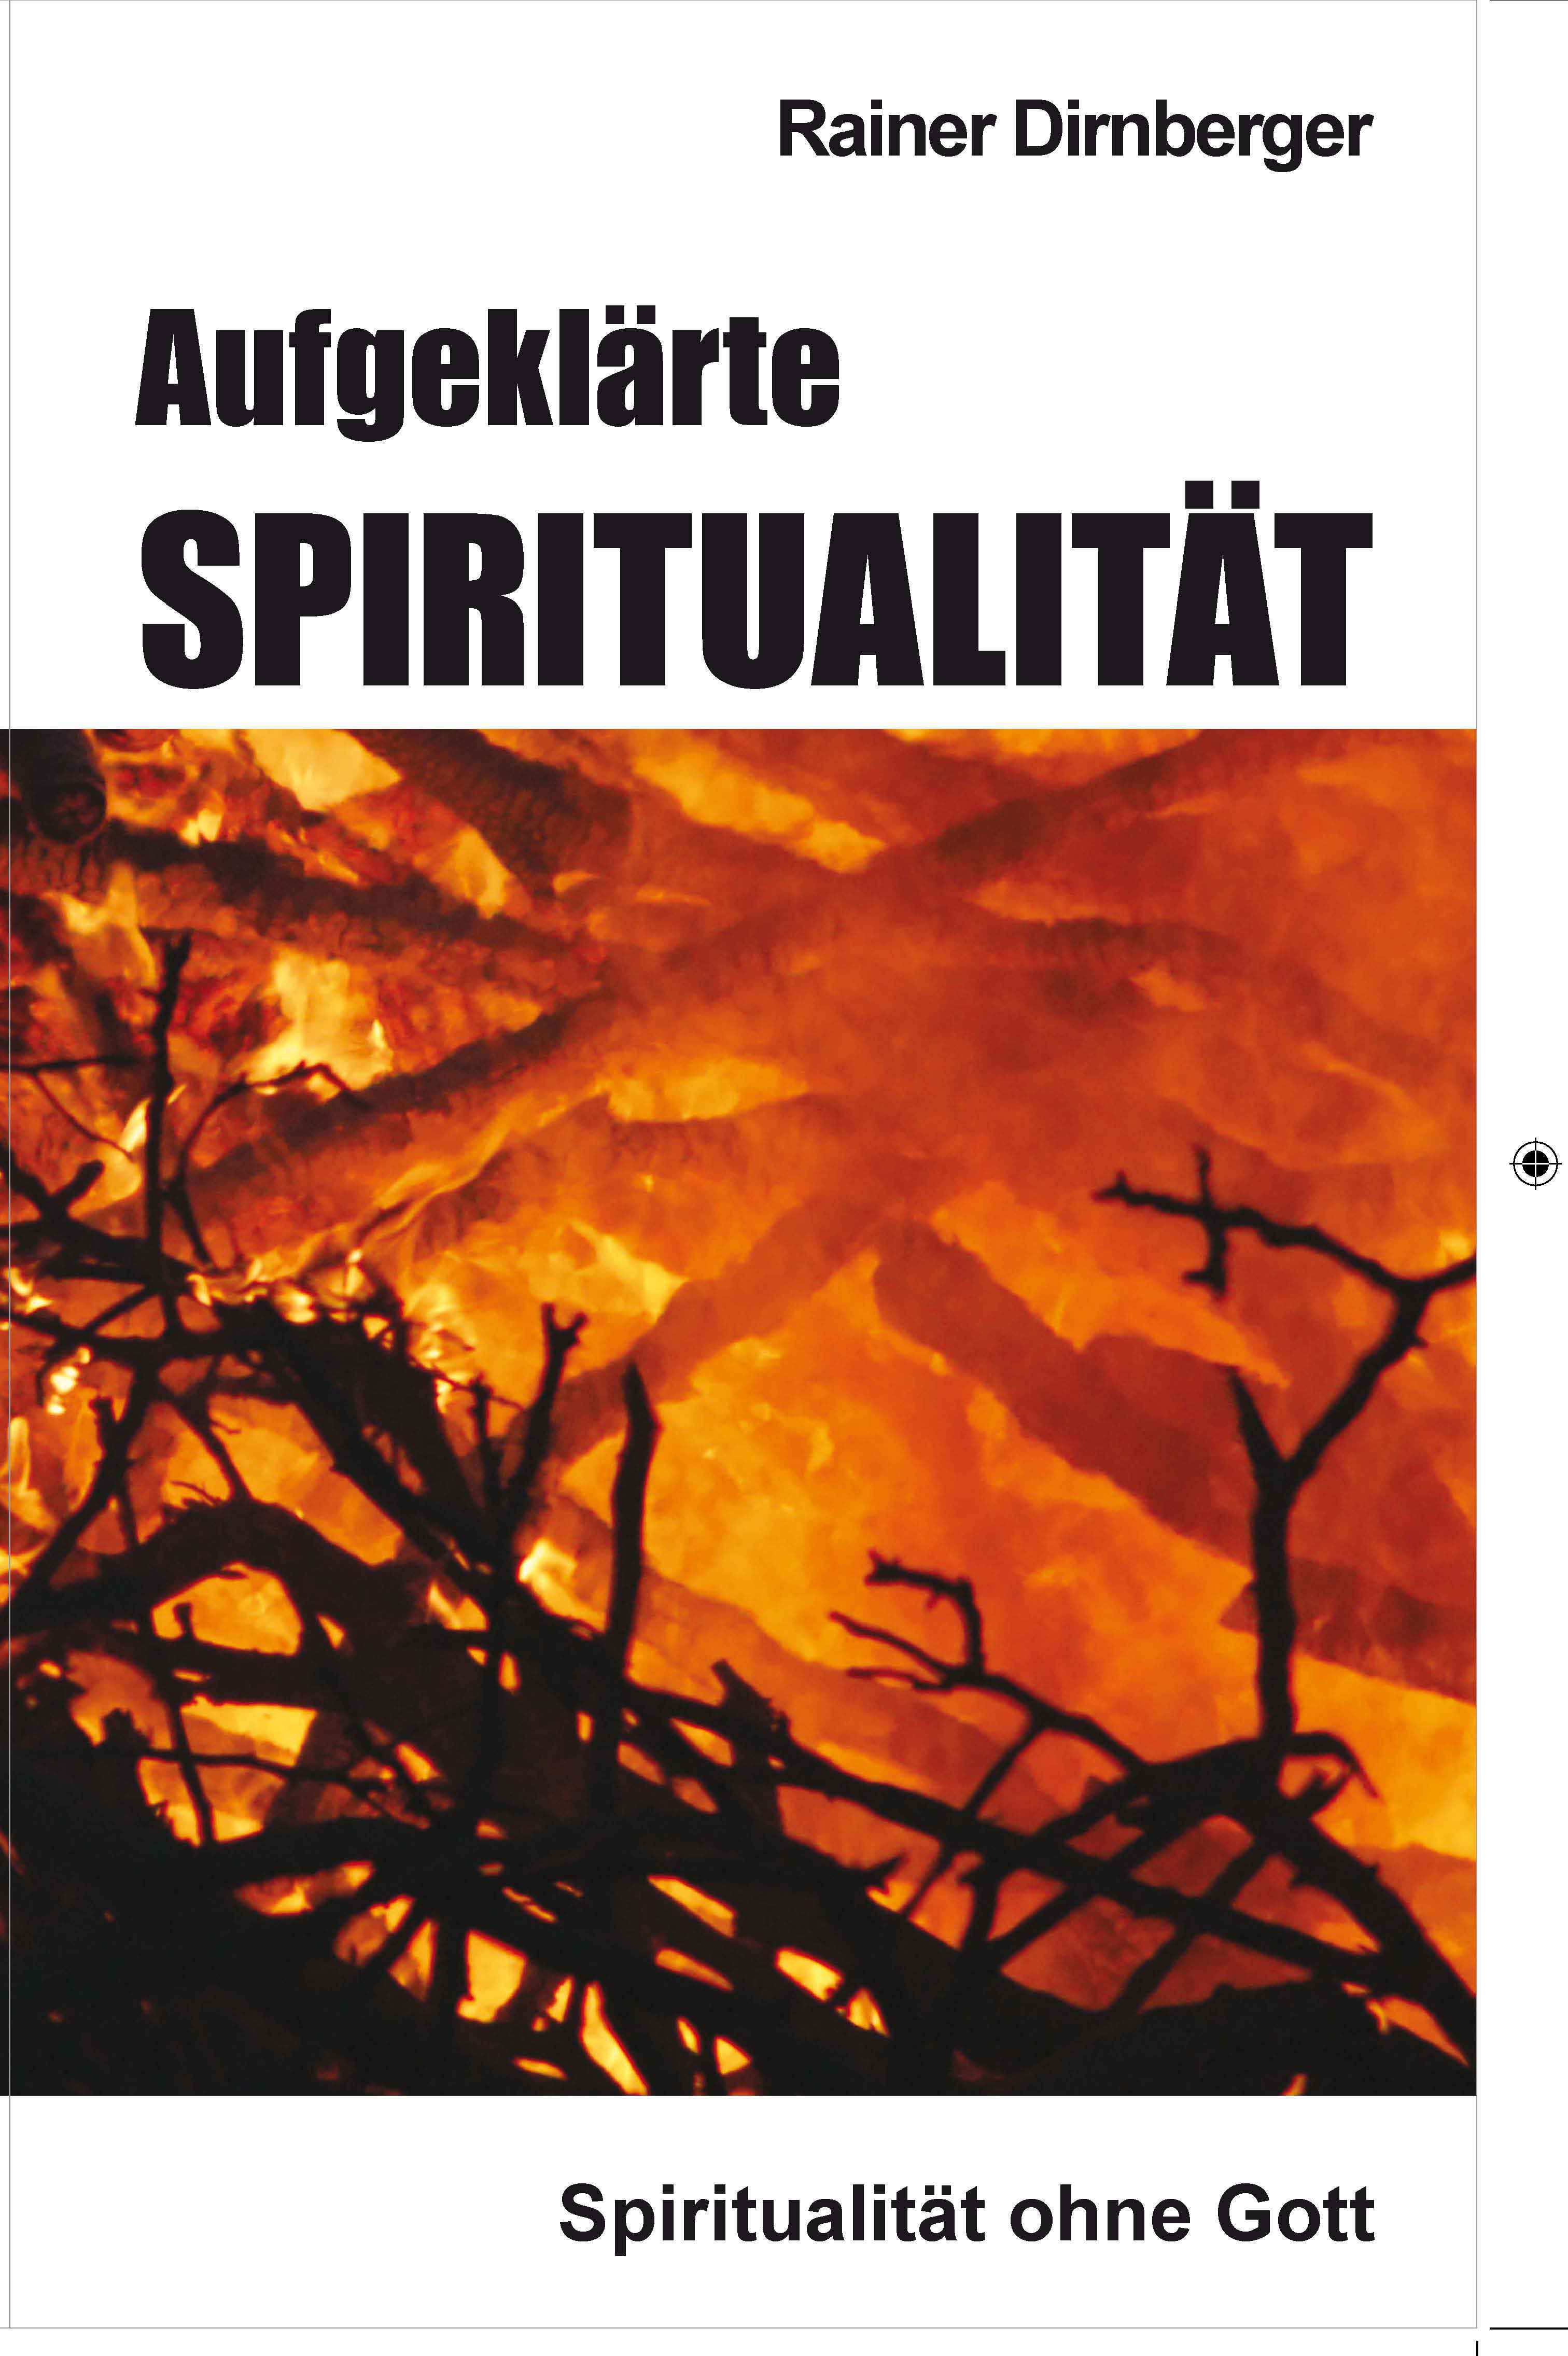 RainerDirnberger_Buch_Spiritualitaet_Cover_hp_a.jpg